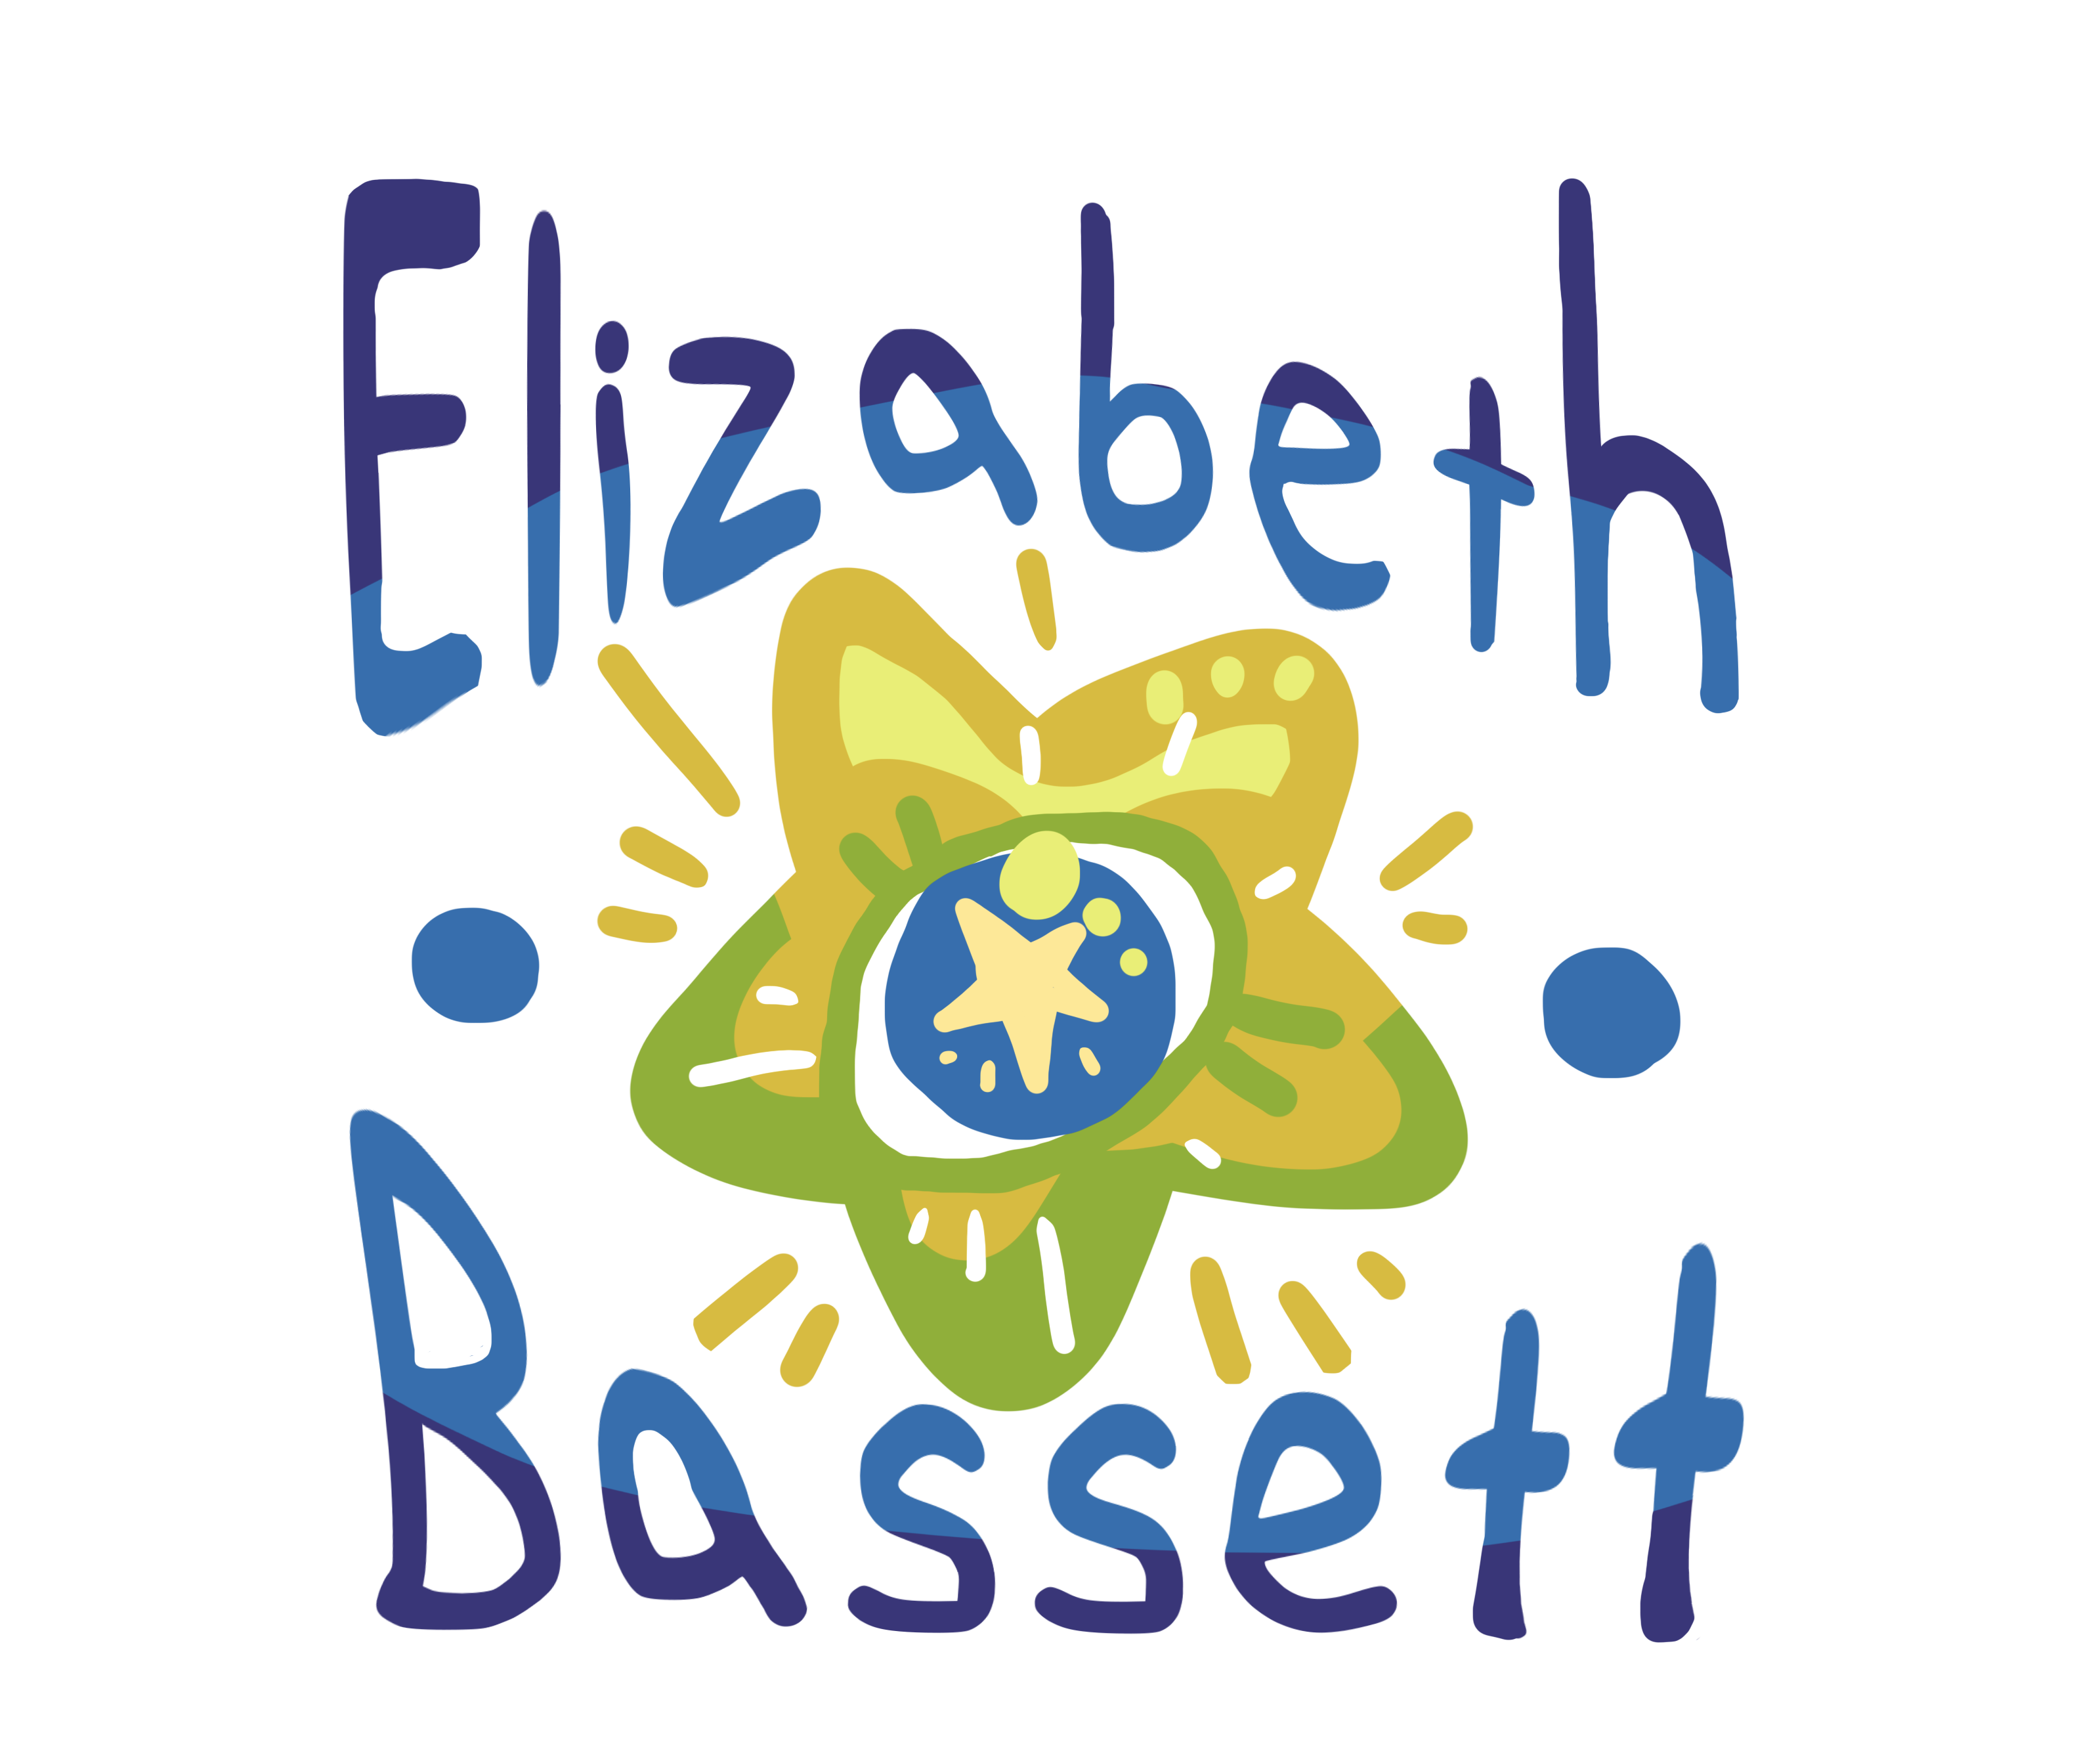 Elizabeth Bassett